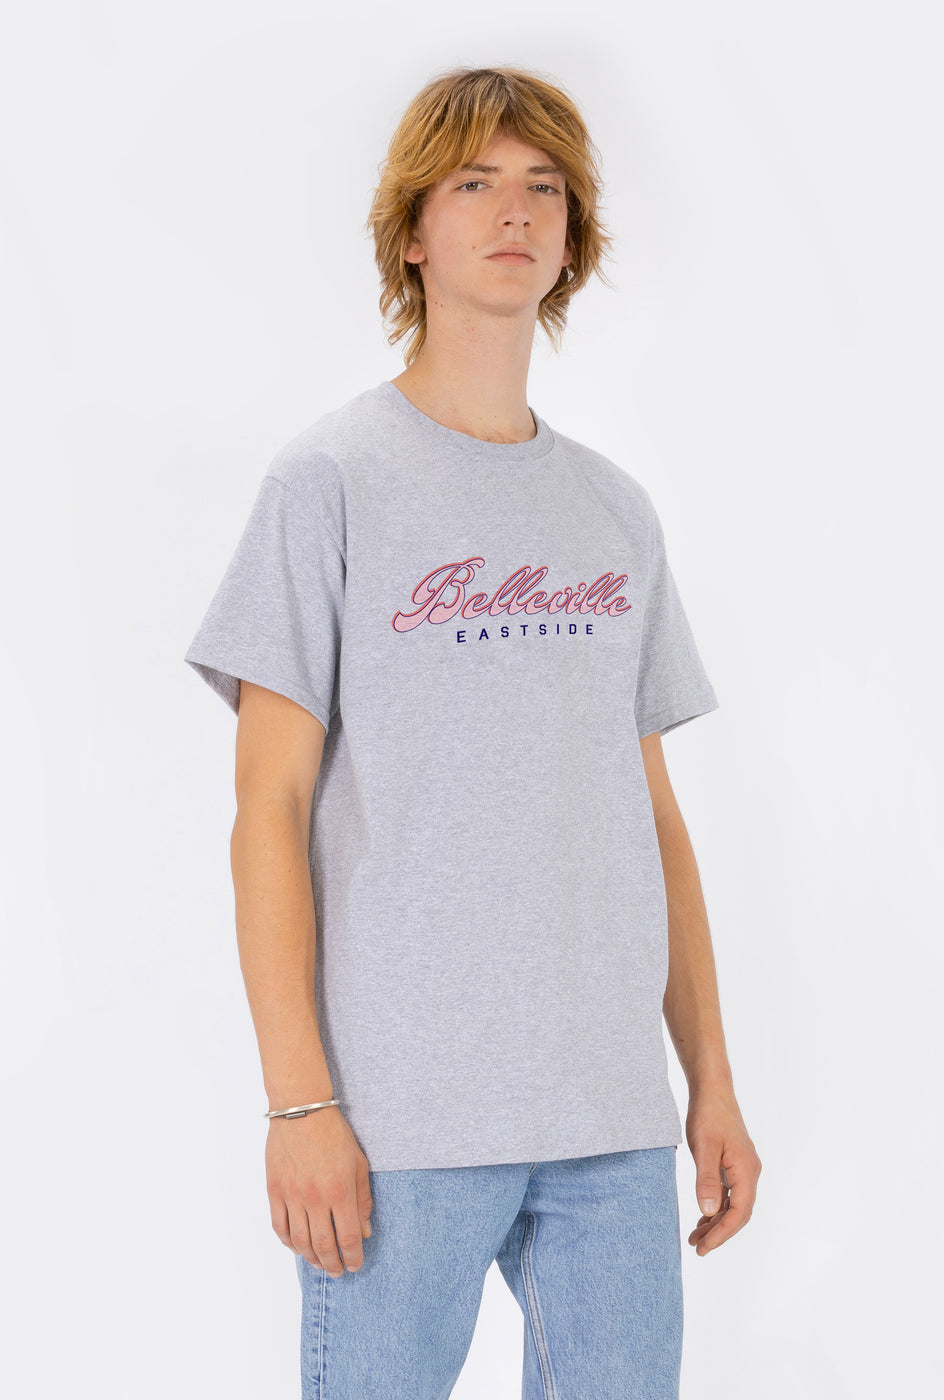 T-Shirt S/S Belleville Eastside